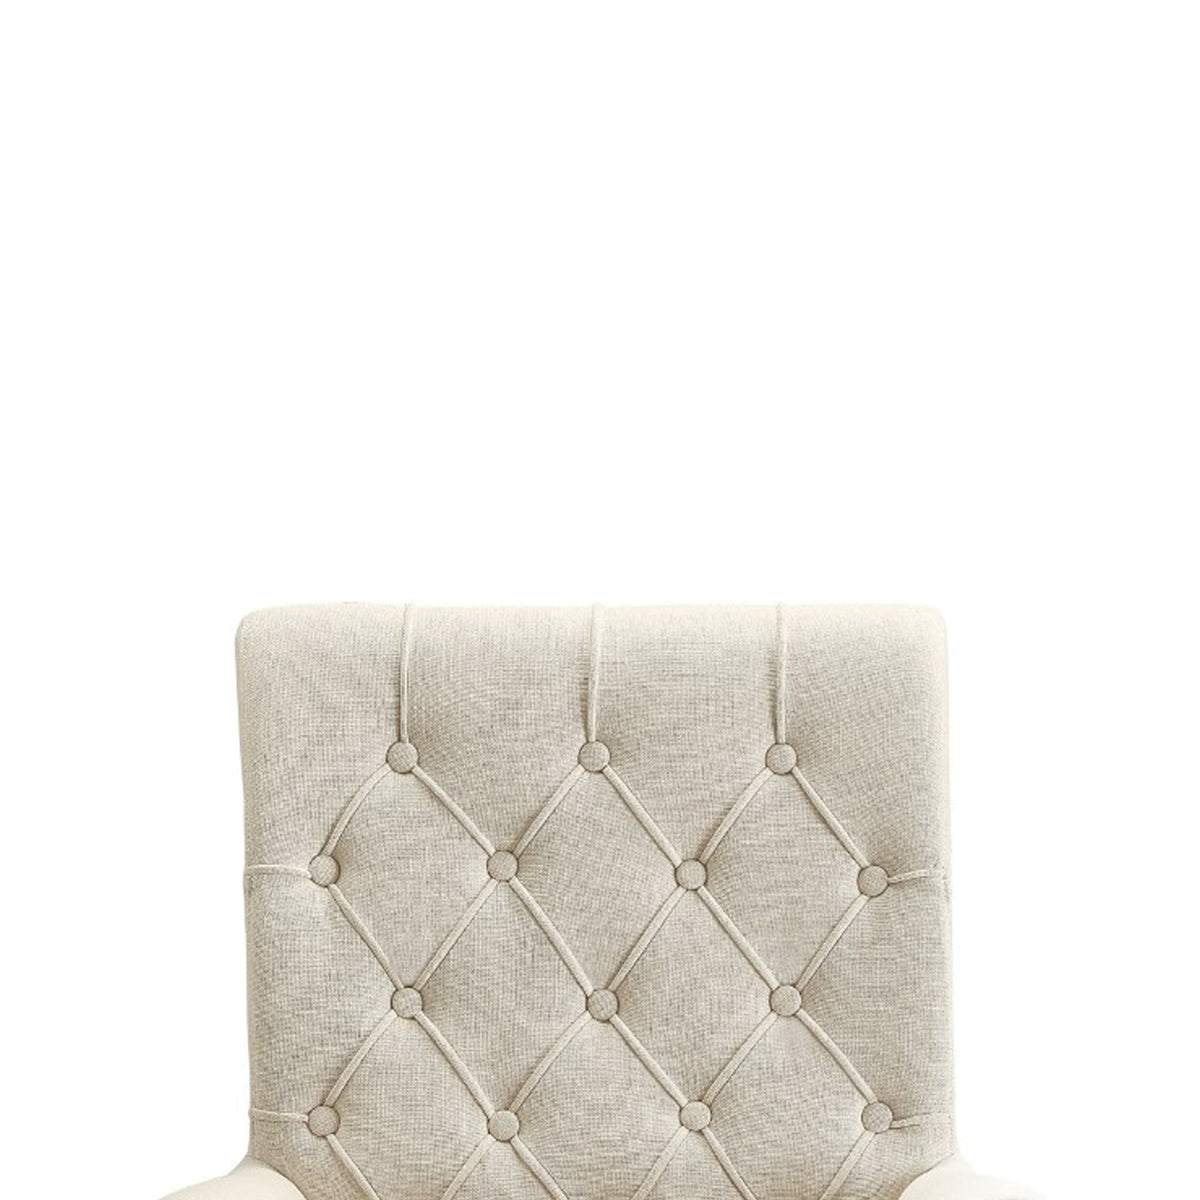 Diamond Tufted Upholstered Dining Chair, Cream & Smokey Black - BM168130